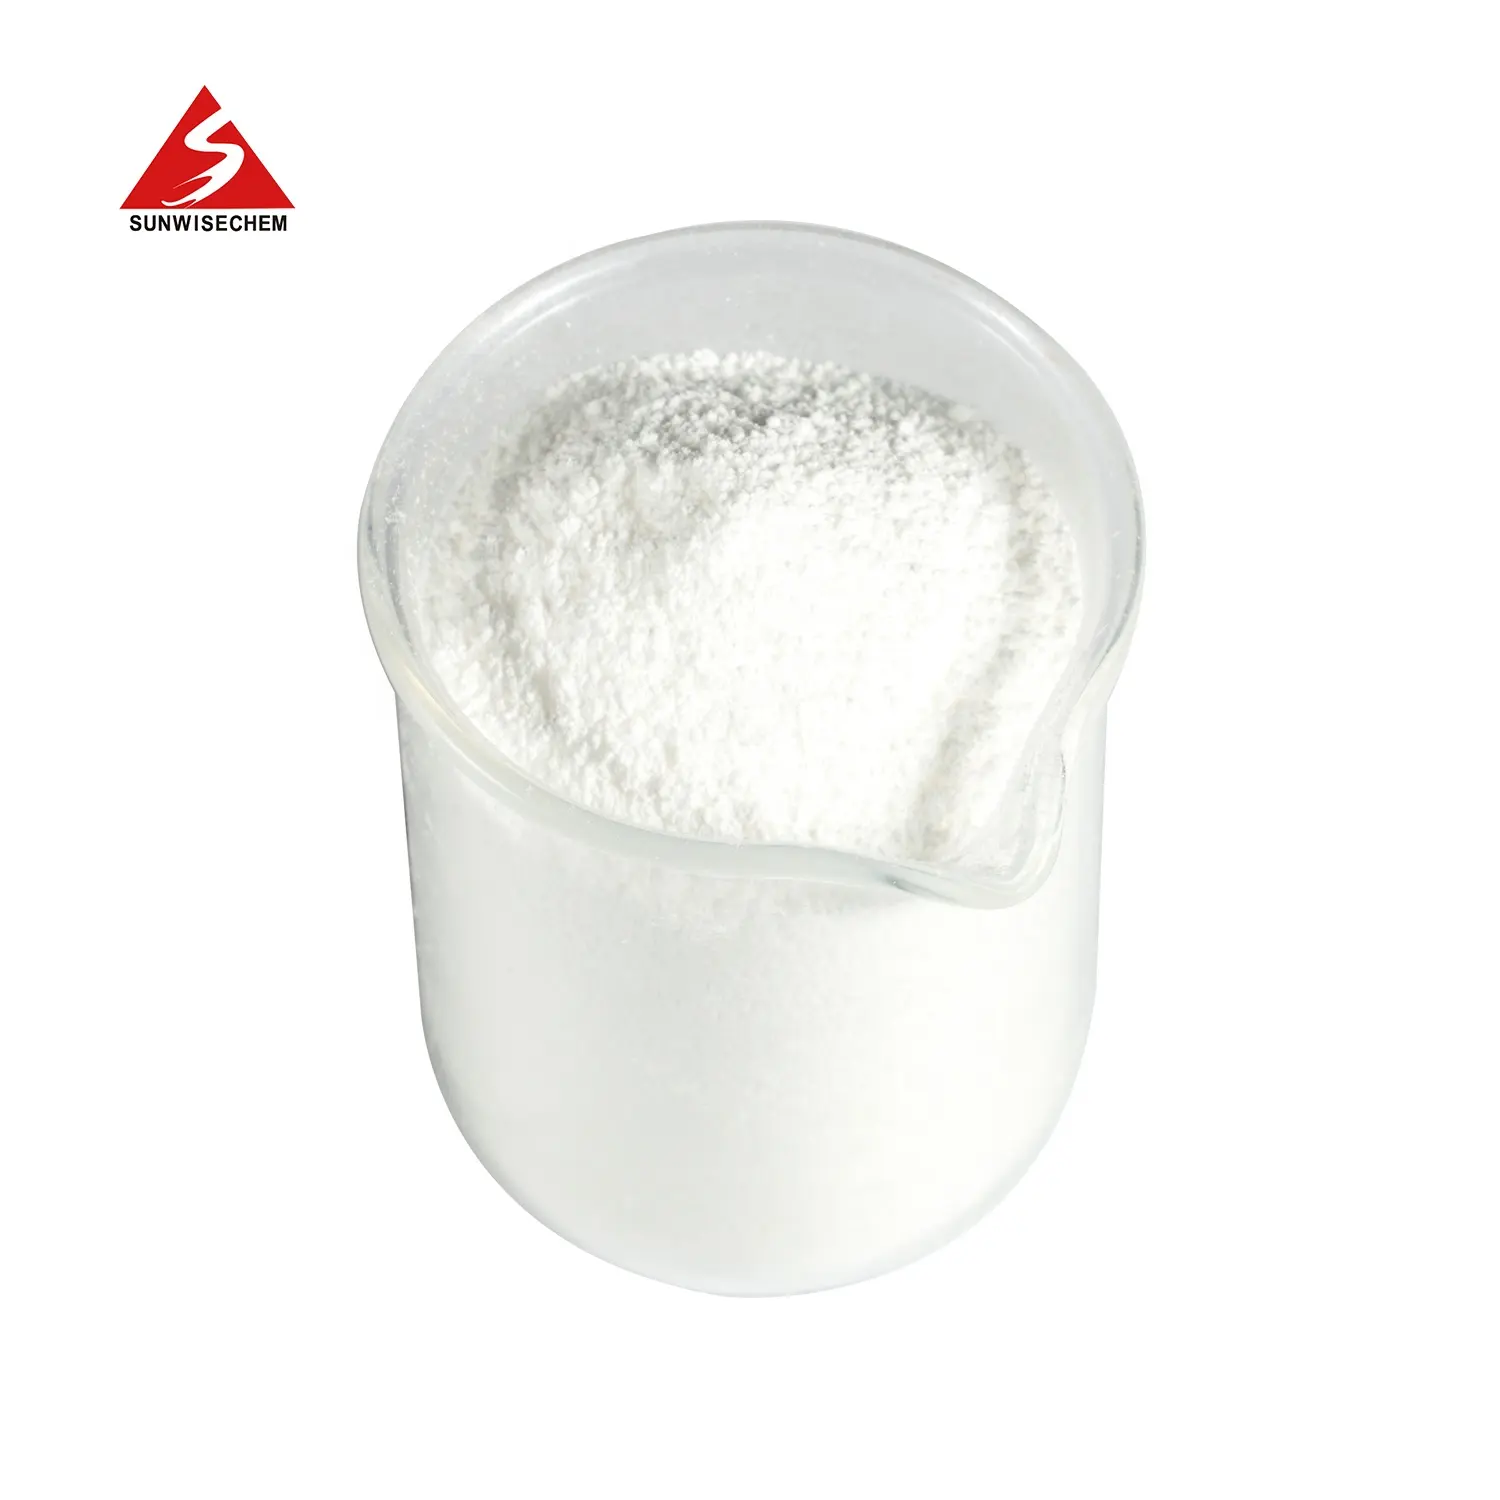 Basic Organic Raw Materials 98% Glutaric Acid Polymerization initiator CAS No 110-94-1